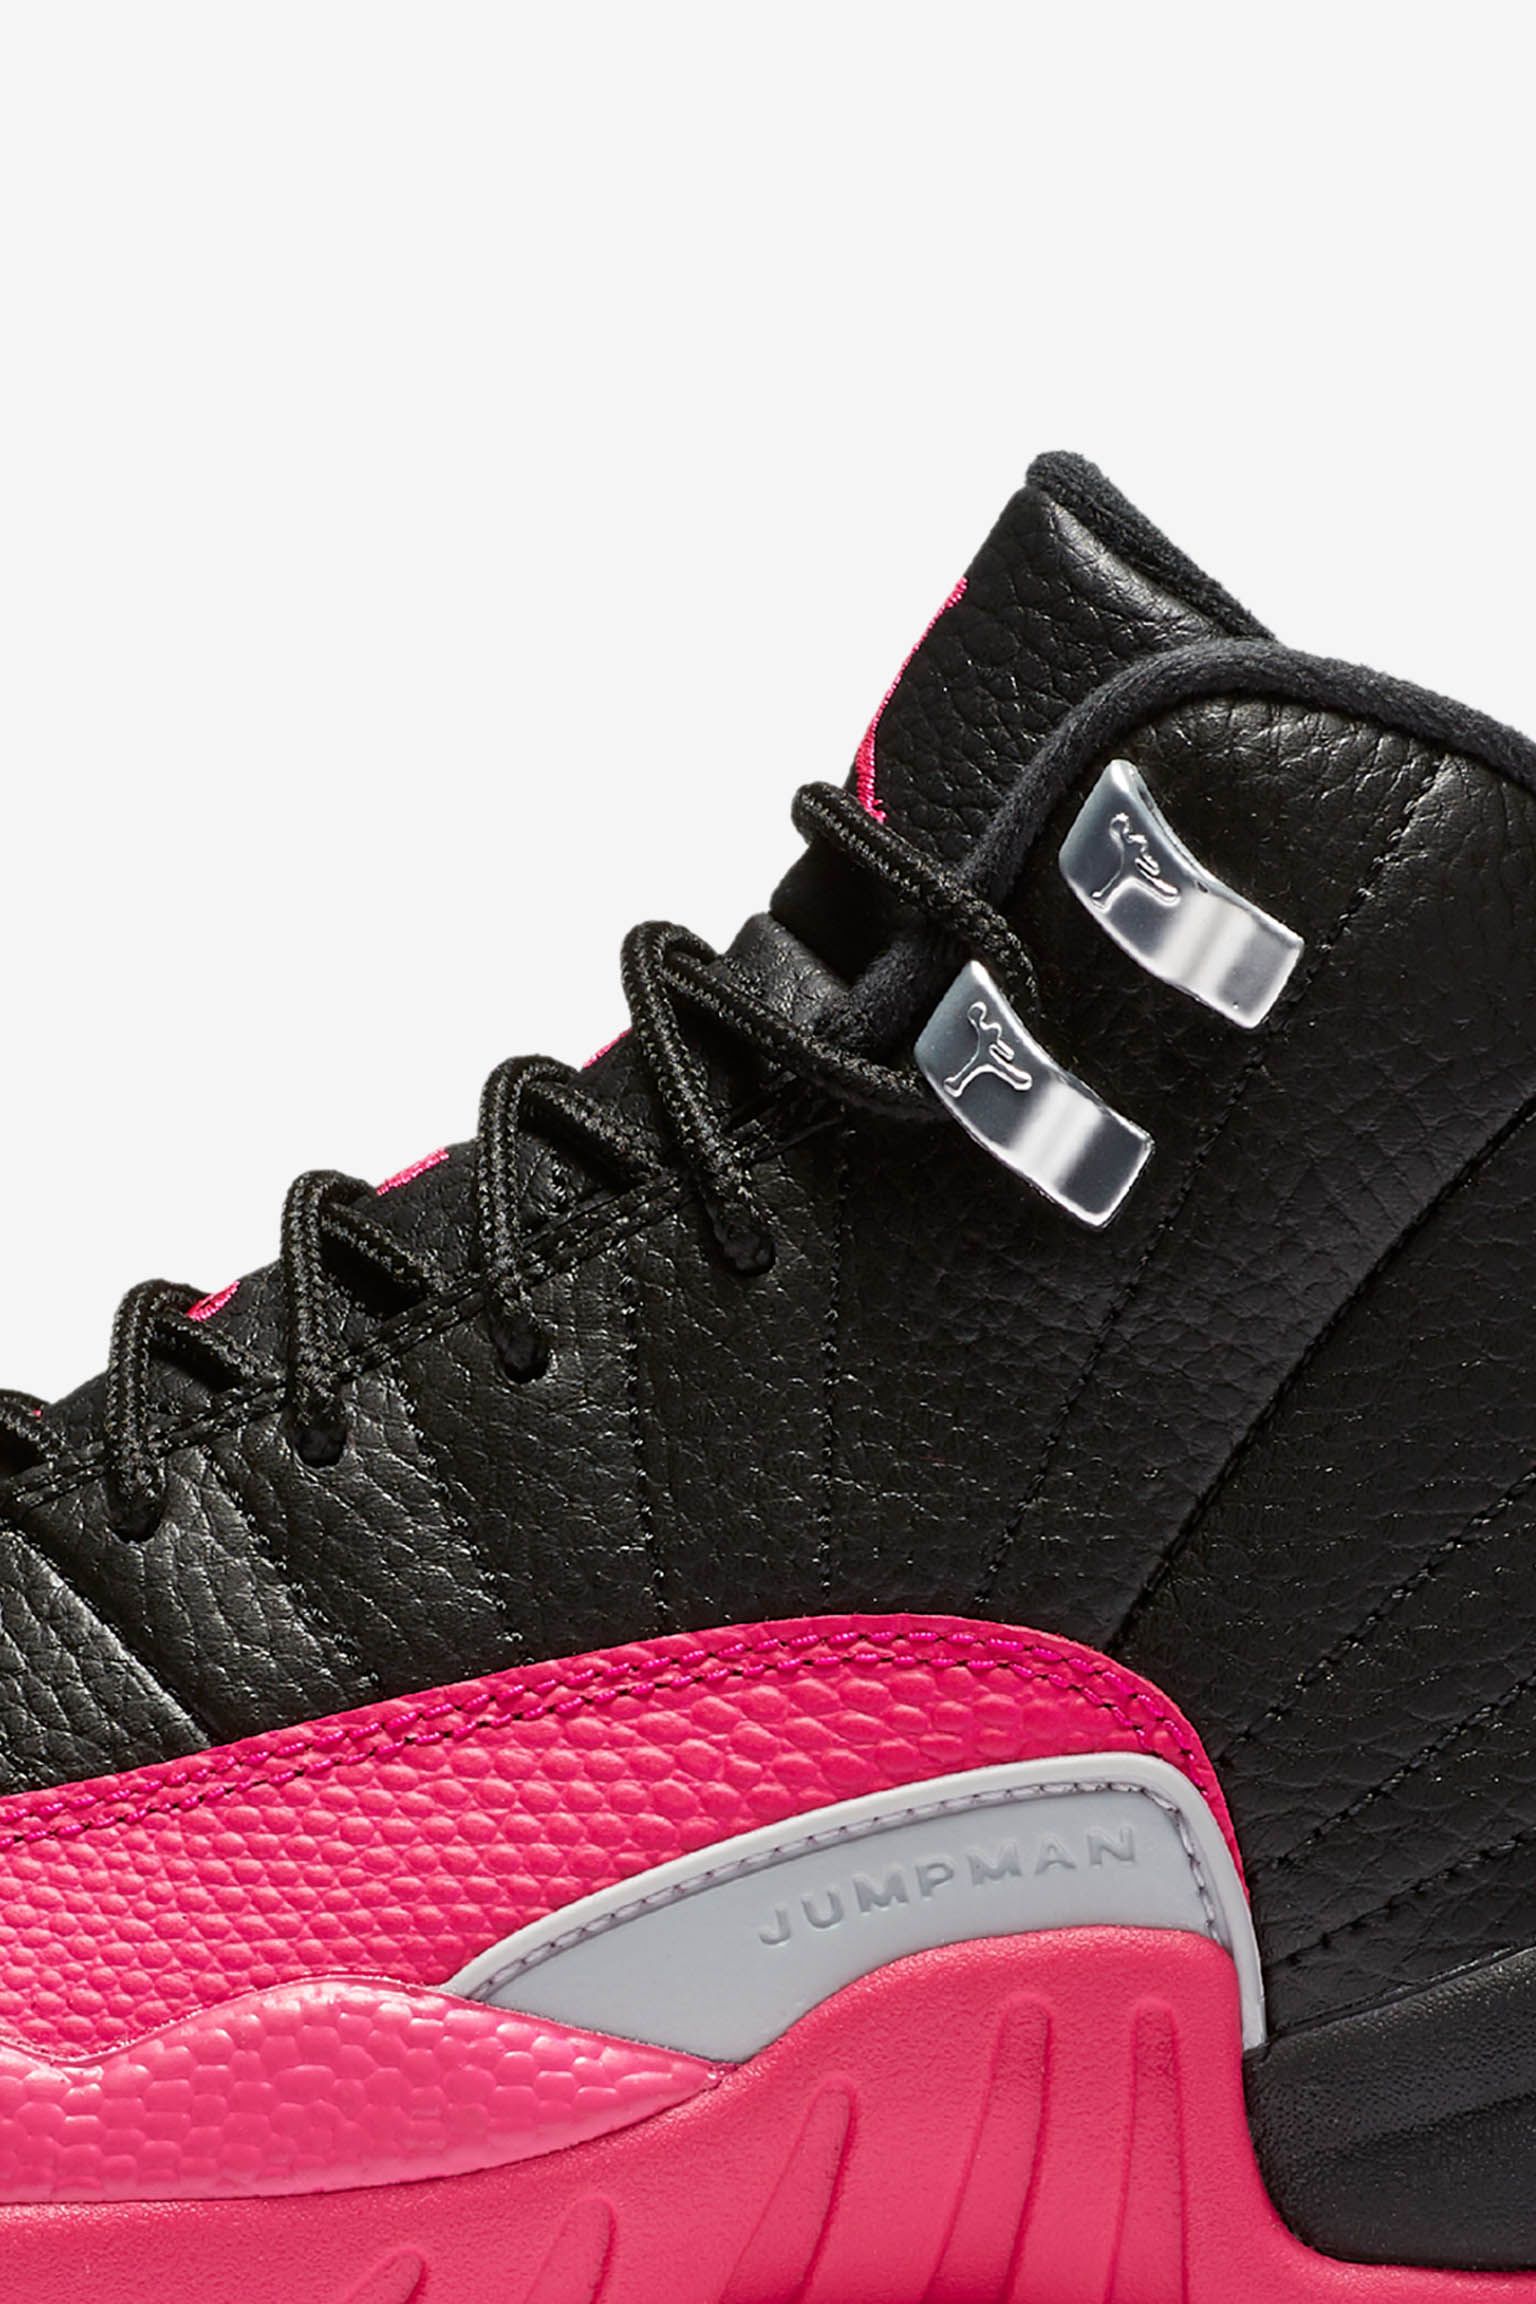 pink black 12s